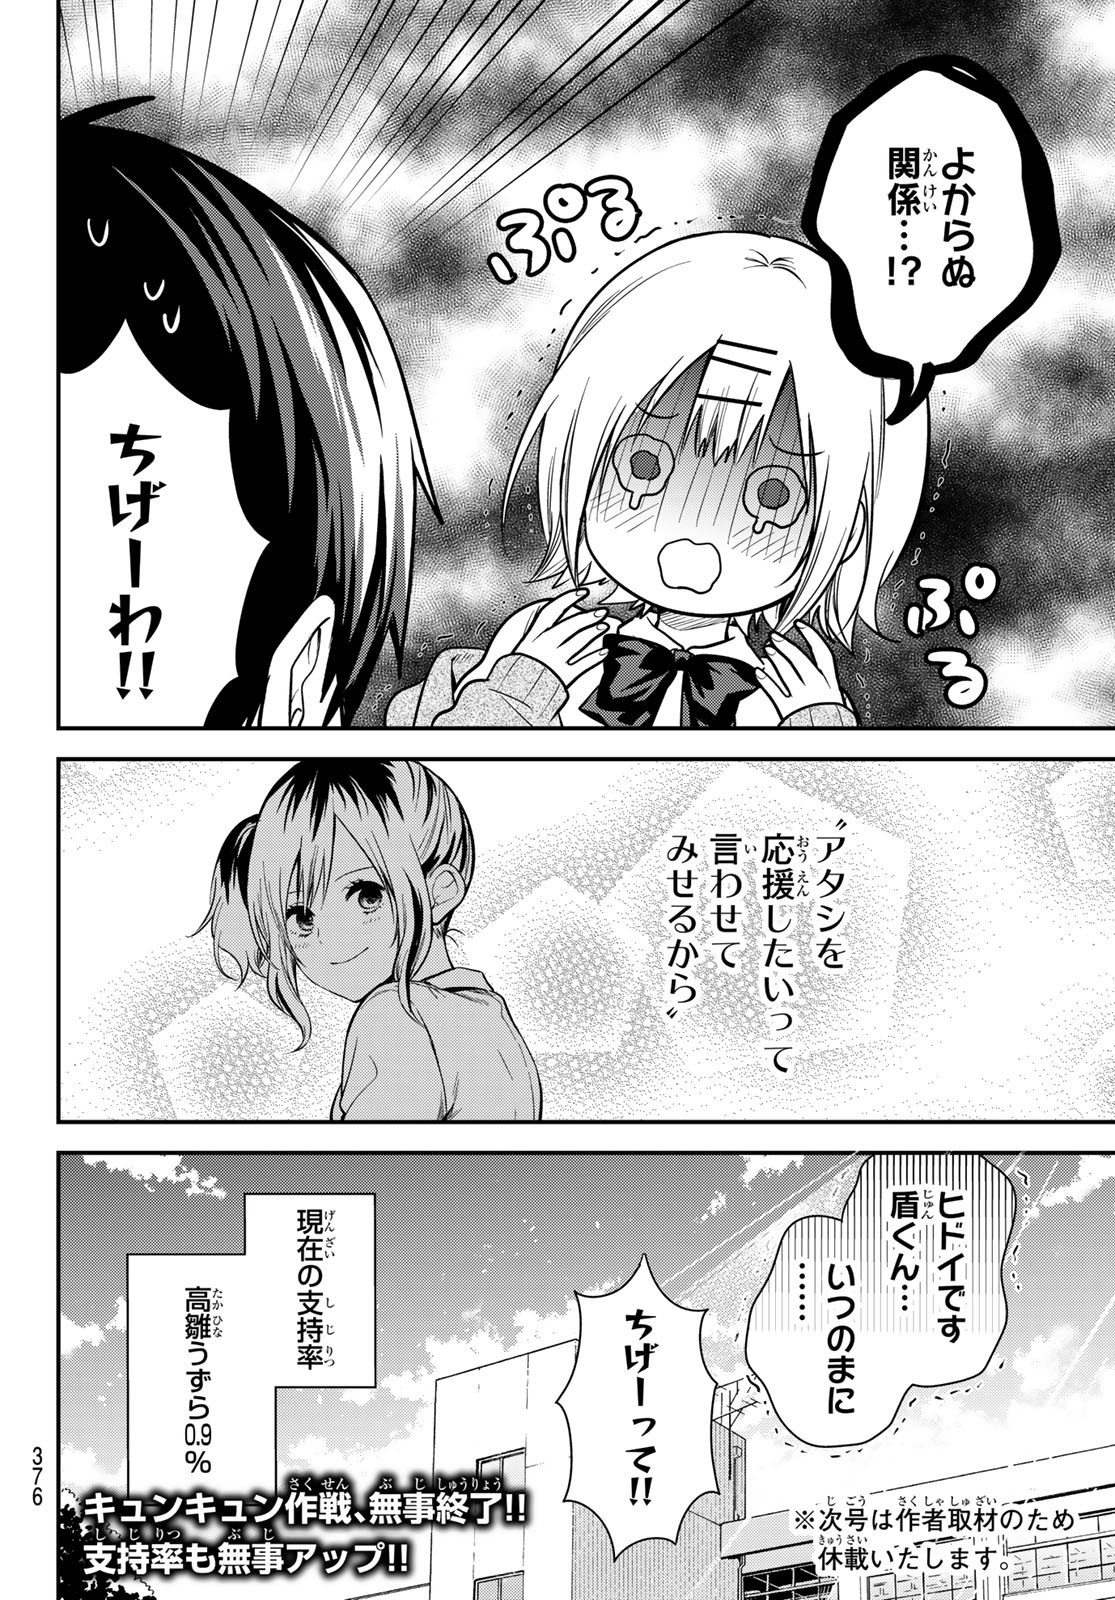 Kimi ga Megami Nara Ii no ni (I Wish You Were My Muse) - Chapter 012 - Page 20